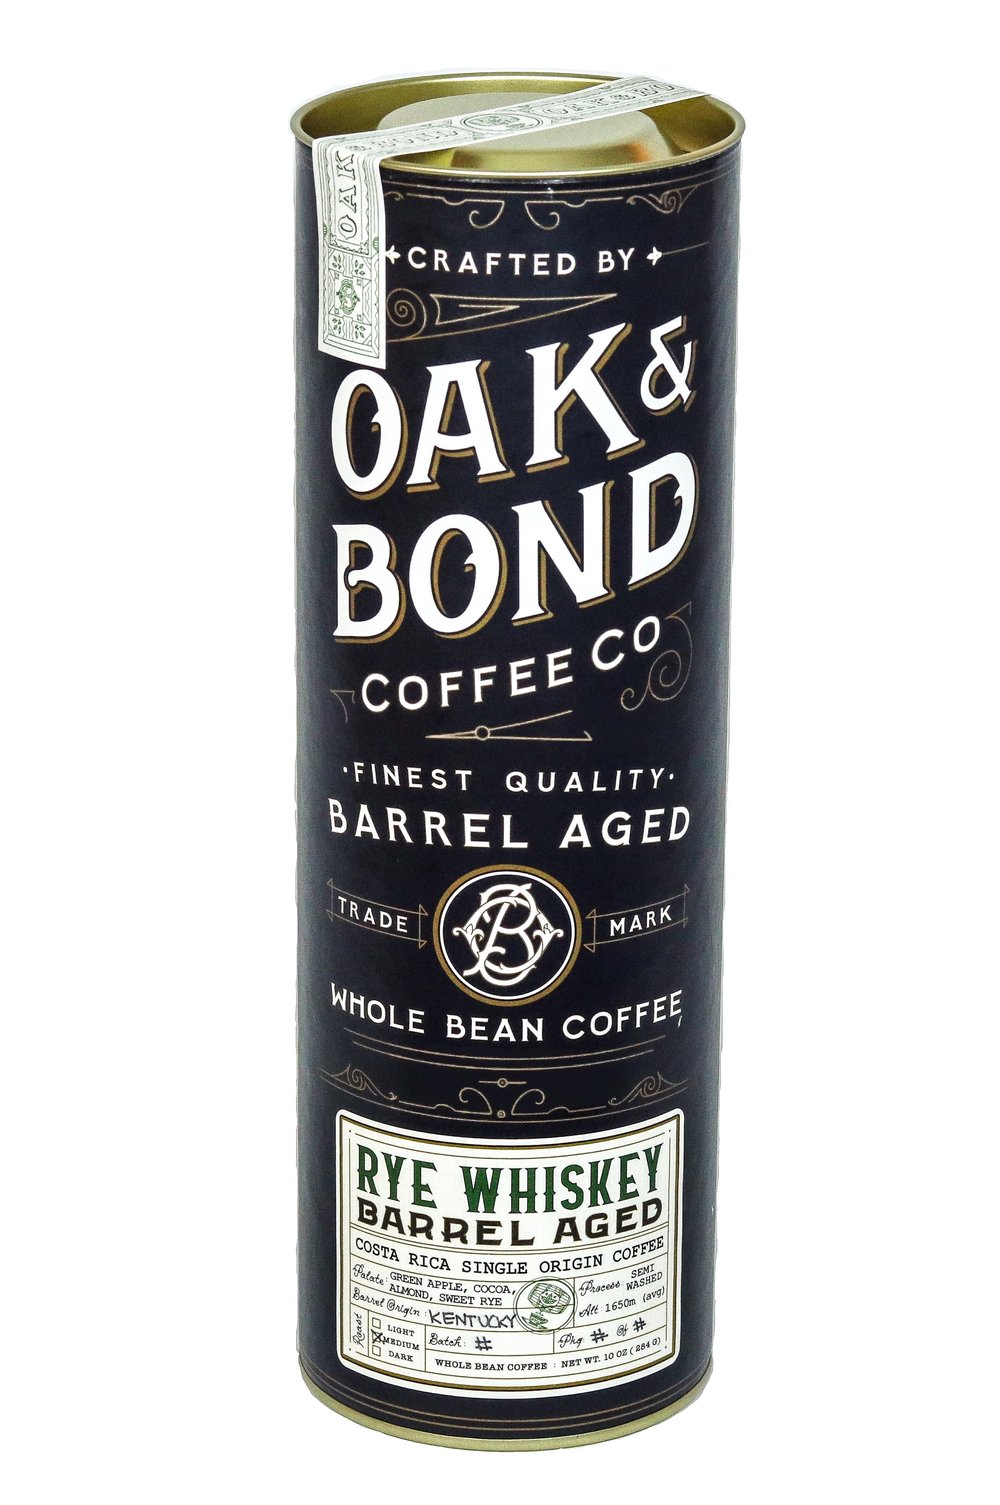 Oak-and-bond-barrel-aged-coffee-3